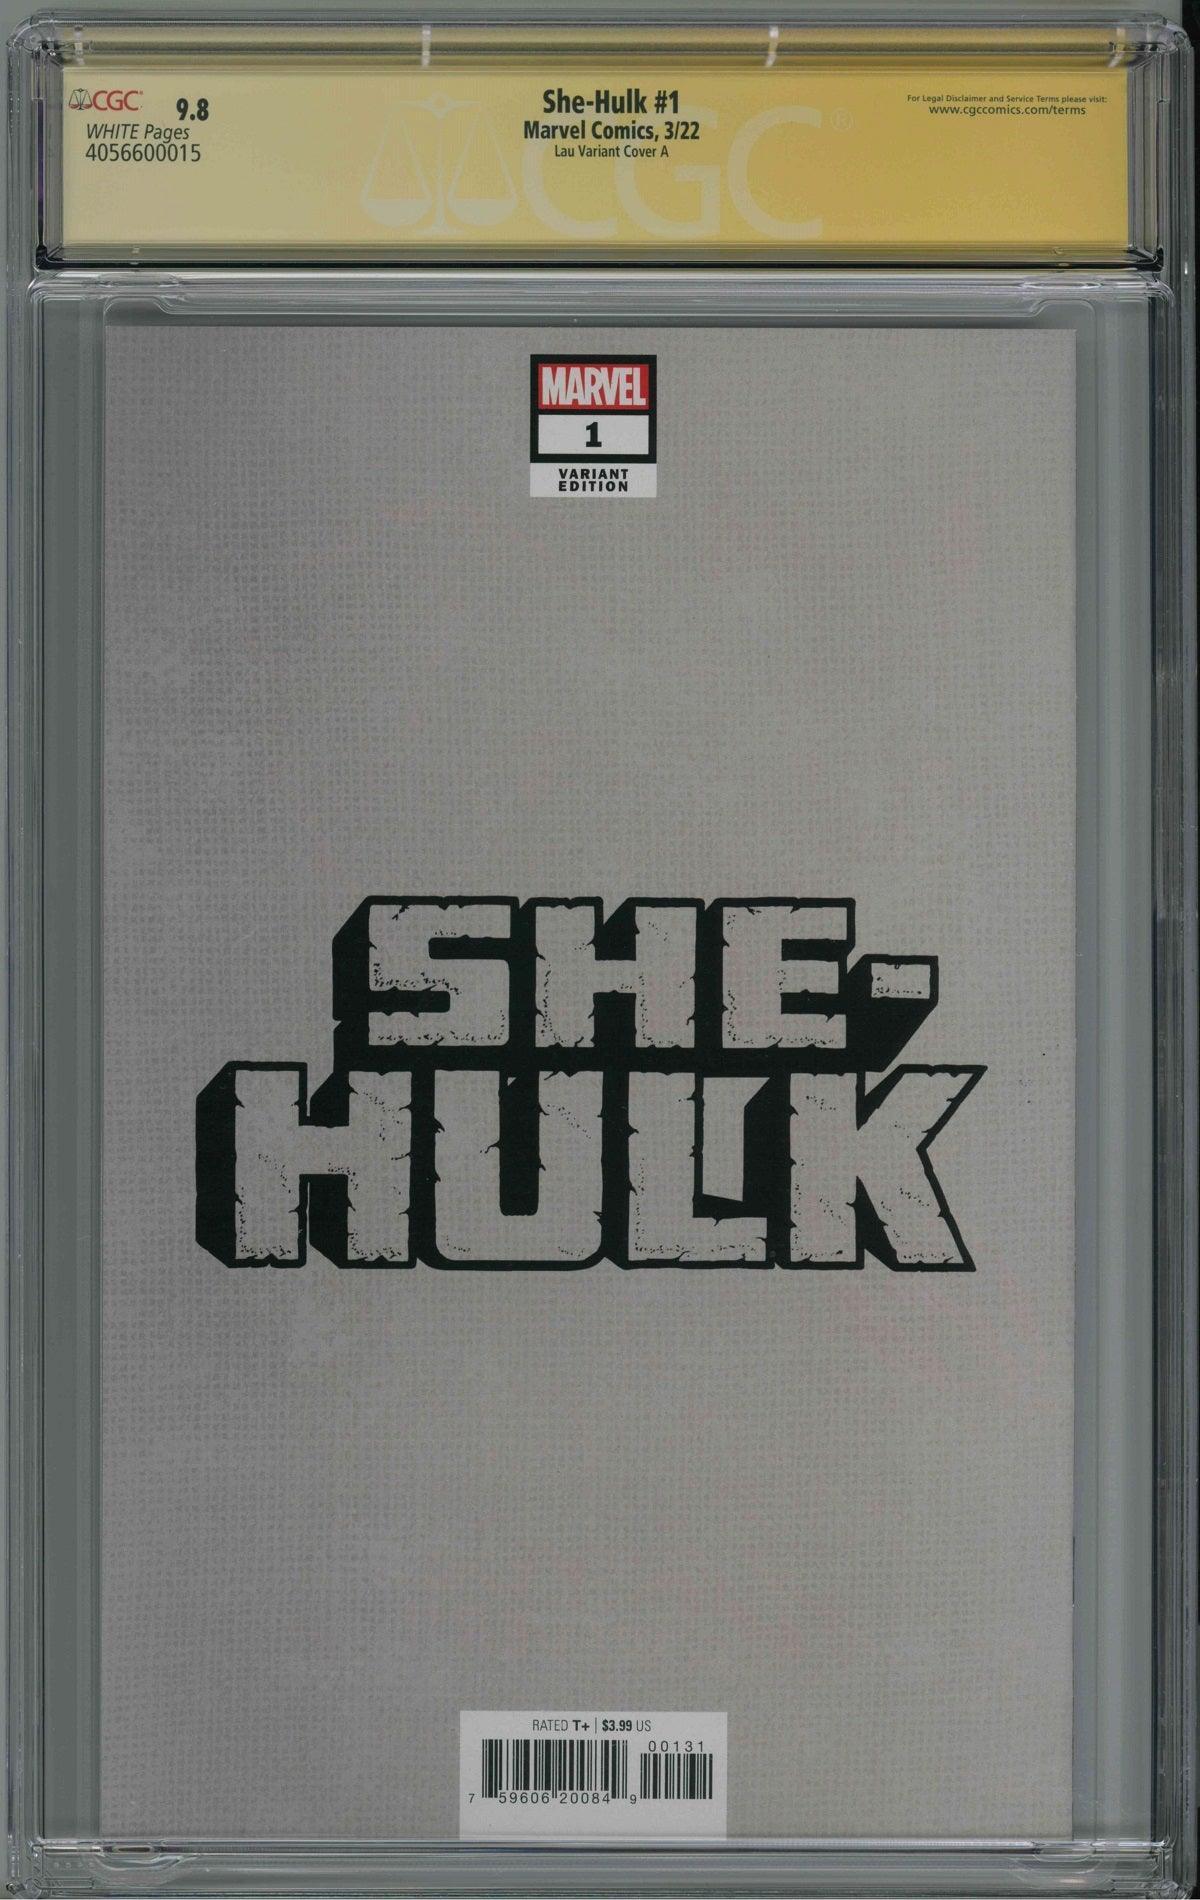 CGC SHE-HULK #1 1:100 LAU "VIRGIN" VARIANT (9.8) SIGNATURE SERIES - SIGNED BY STANLEY "ARTGERM" LAU - Kings Comics